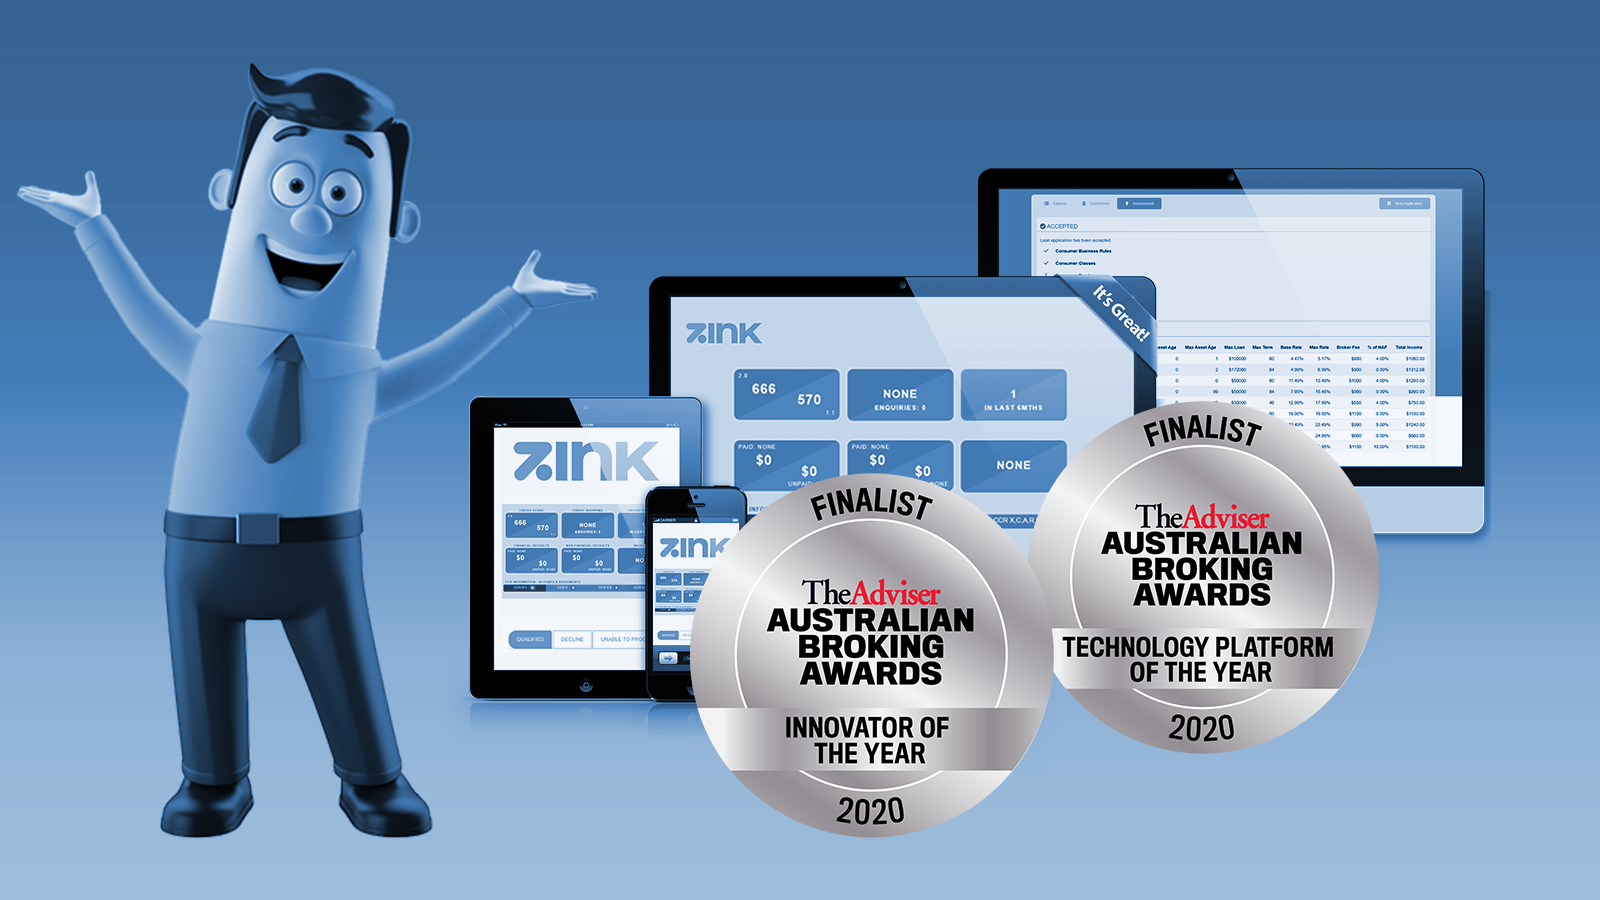 Zink-Technology-Platform-of-the-Year-Australian-Brokir-Awards-2-